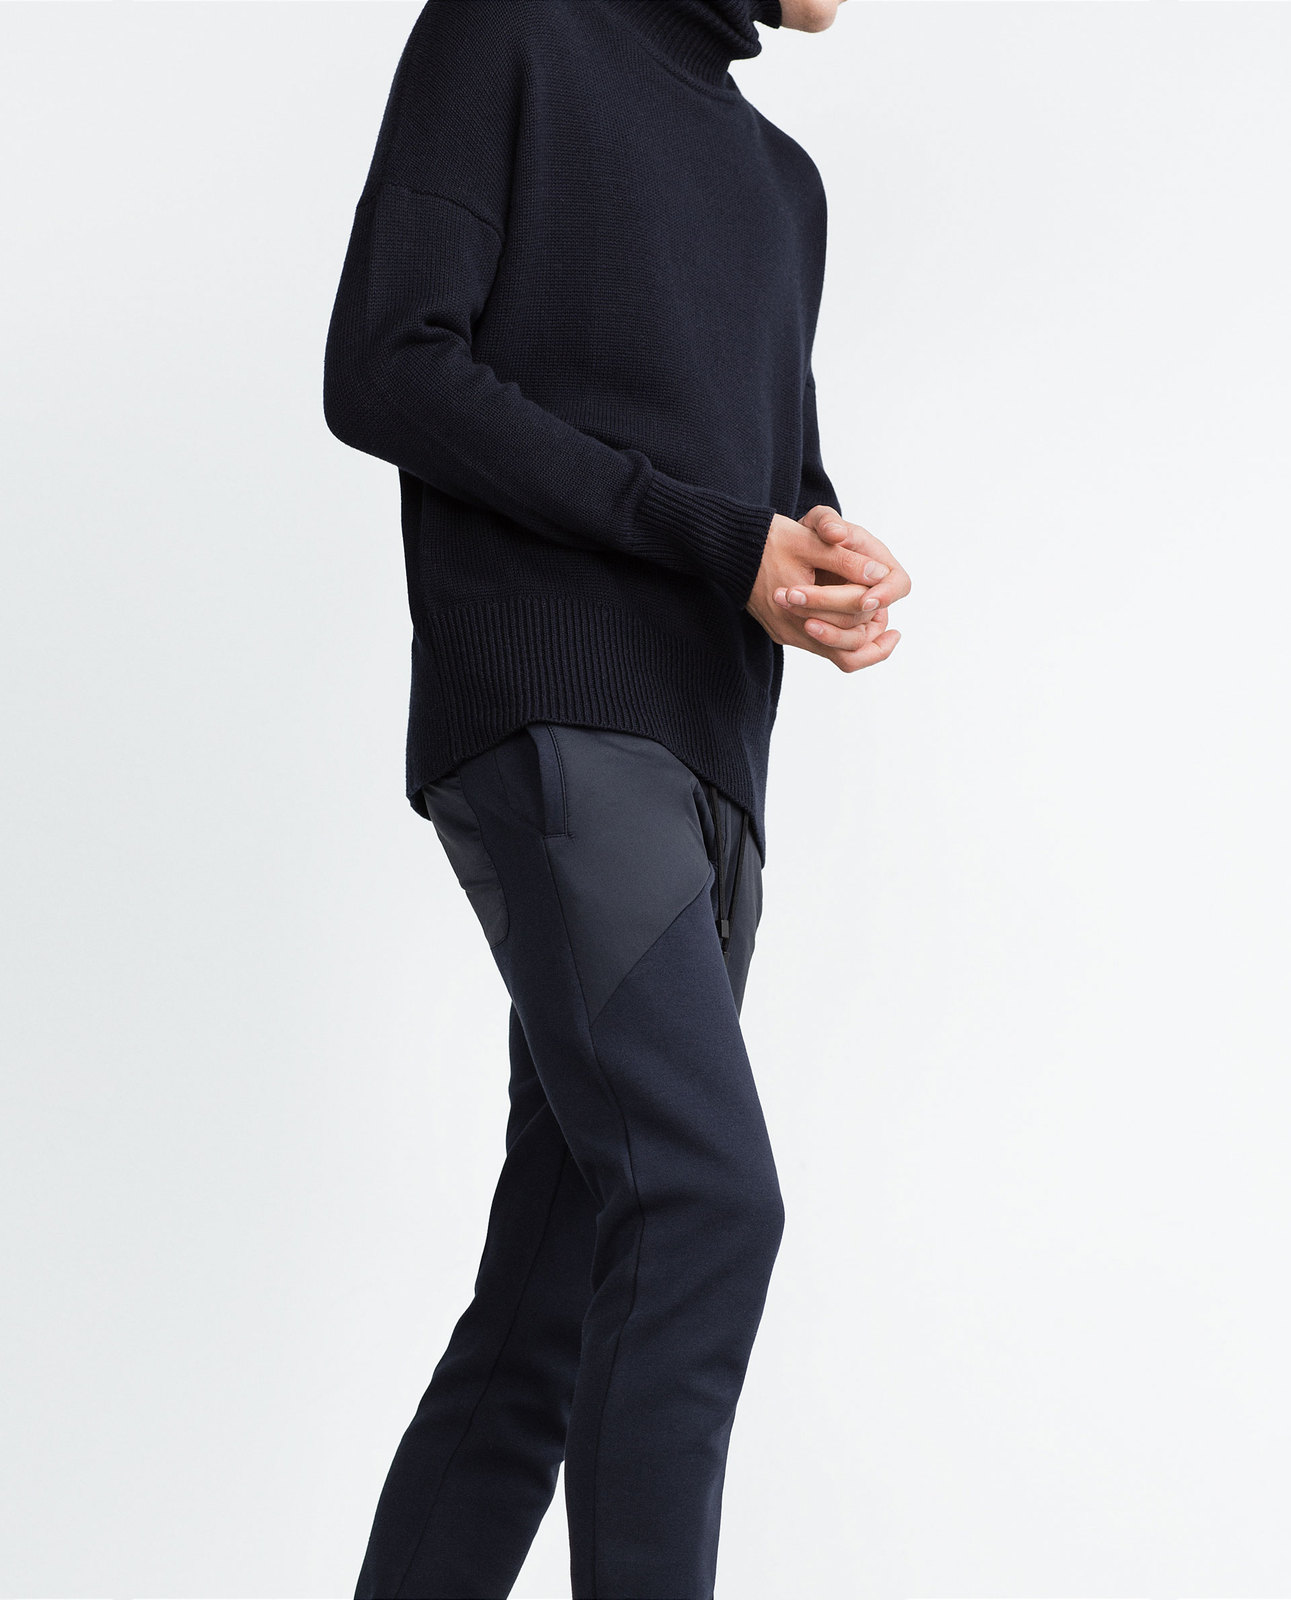 Zara férfi fekete melegítő nadrág 2015.10.16 fotója